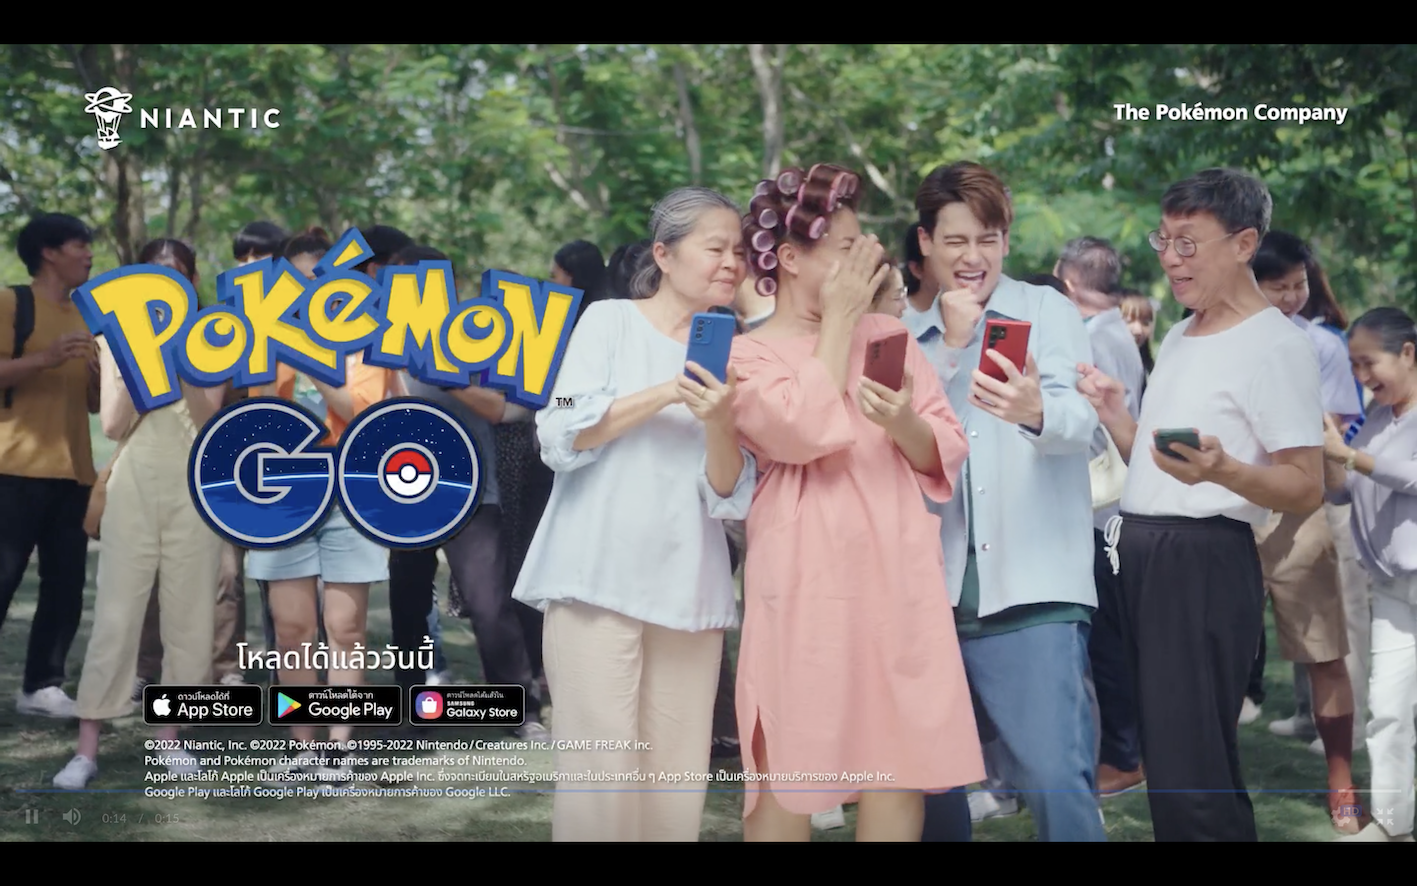 S4 2022 09 21 15.30.00Thumb | Pokémon Go | แคมเปญสุดเอ็กซ์คลูซีฟจาก Pokémon GO และไอซ์ พาริส เริ่มต้นแล้ววันนี้ในประเทศไทย